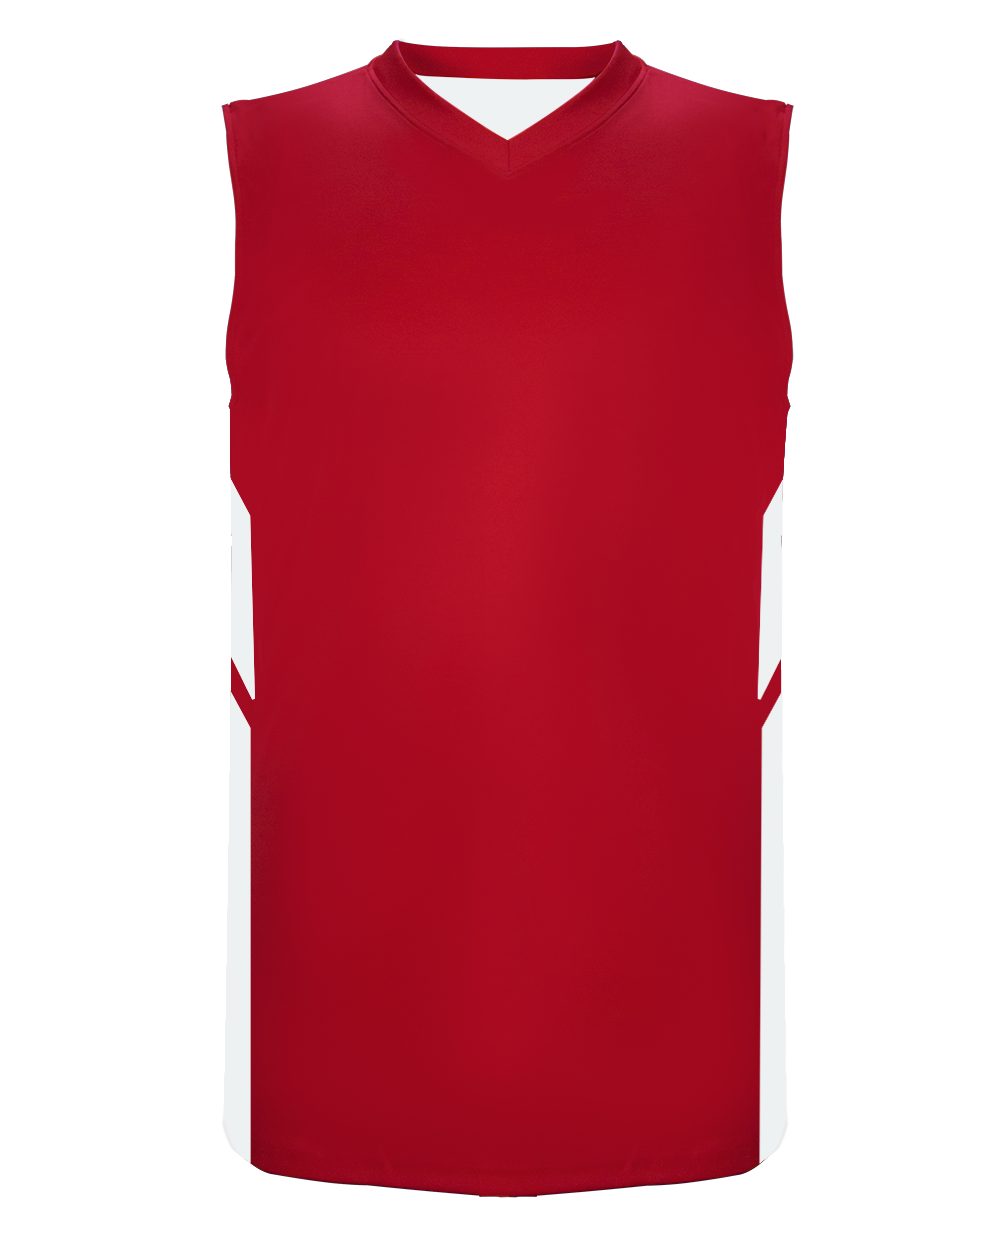 Source Near Me White Custom Basketball Wear Clothes Best Wholesale Blank Basketball  Jerseys on m.